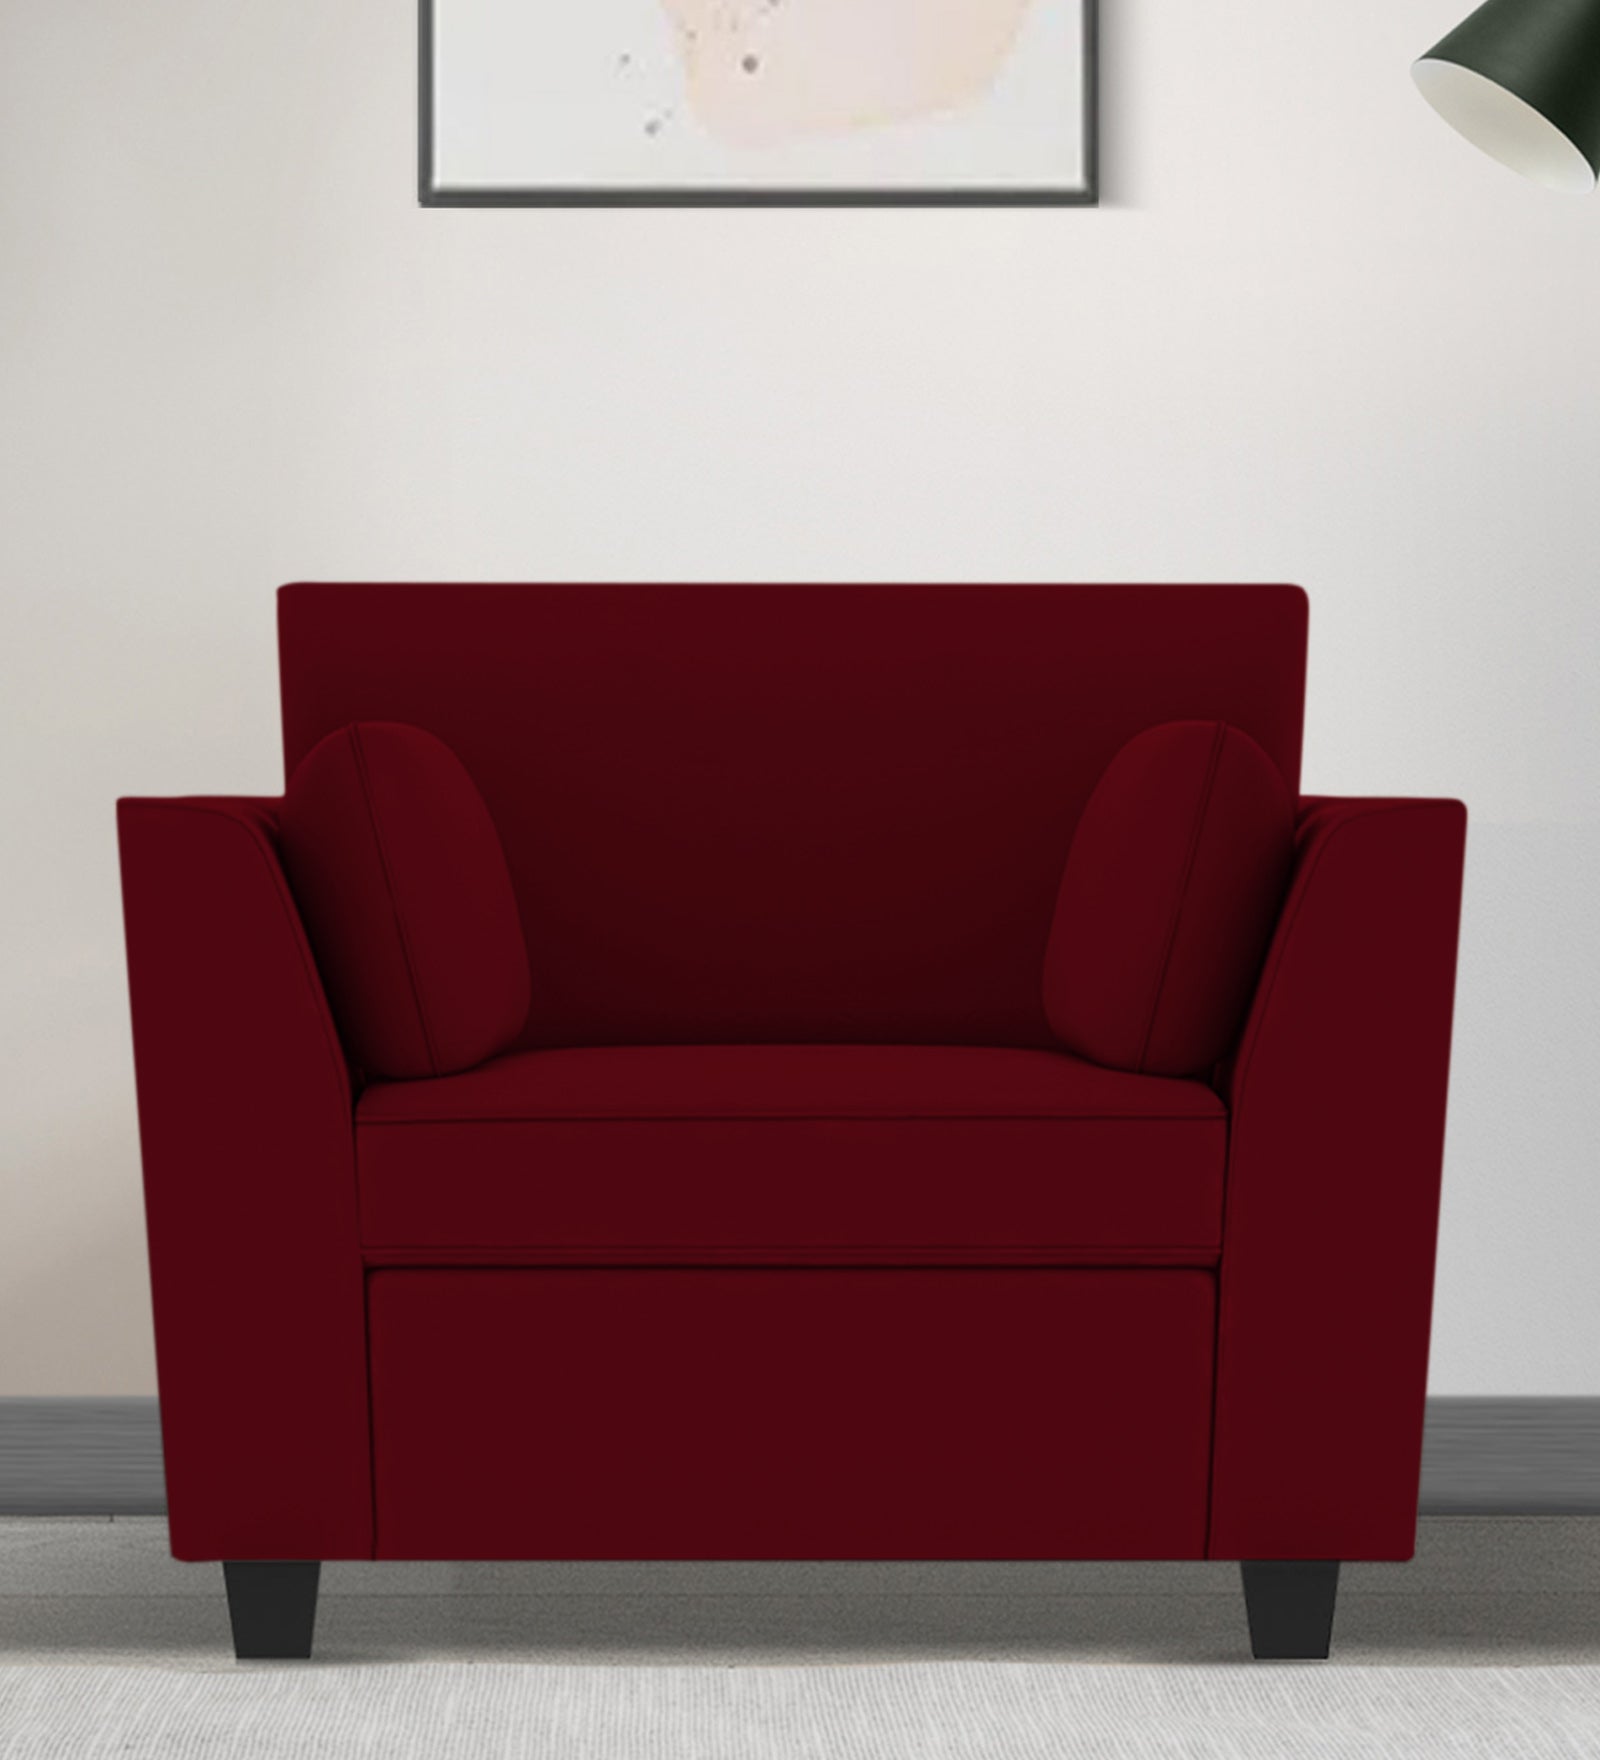 Bristo Velvet 1 Seater Sofa in Cherry red Colour With Storage